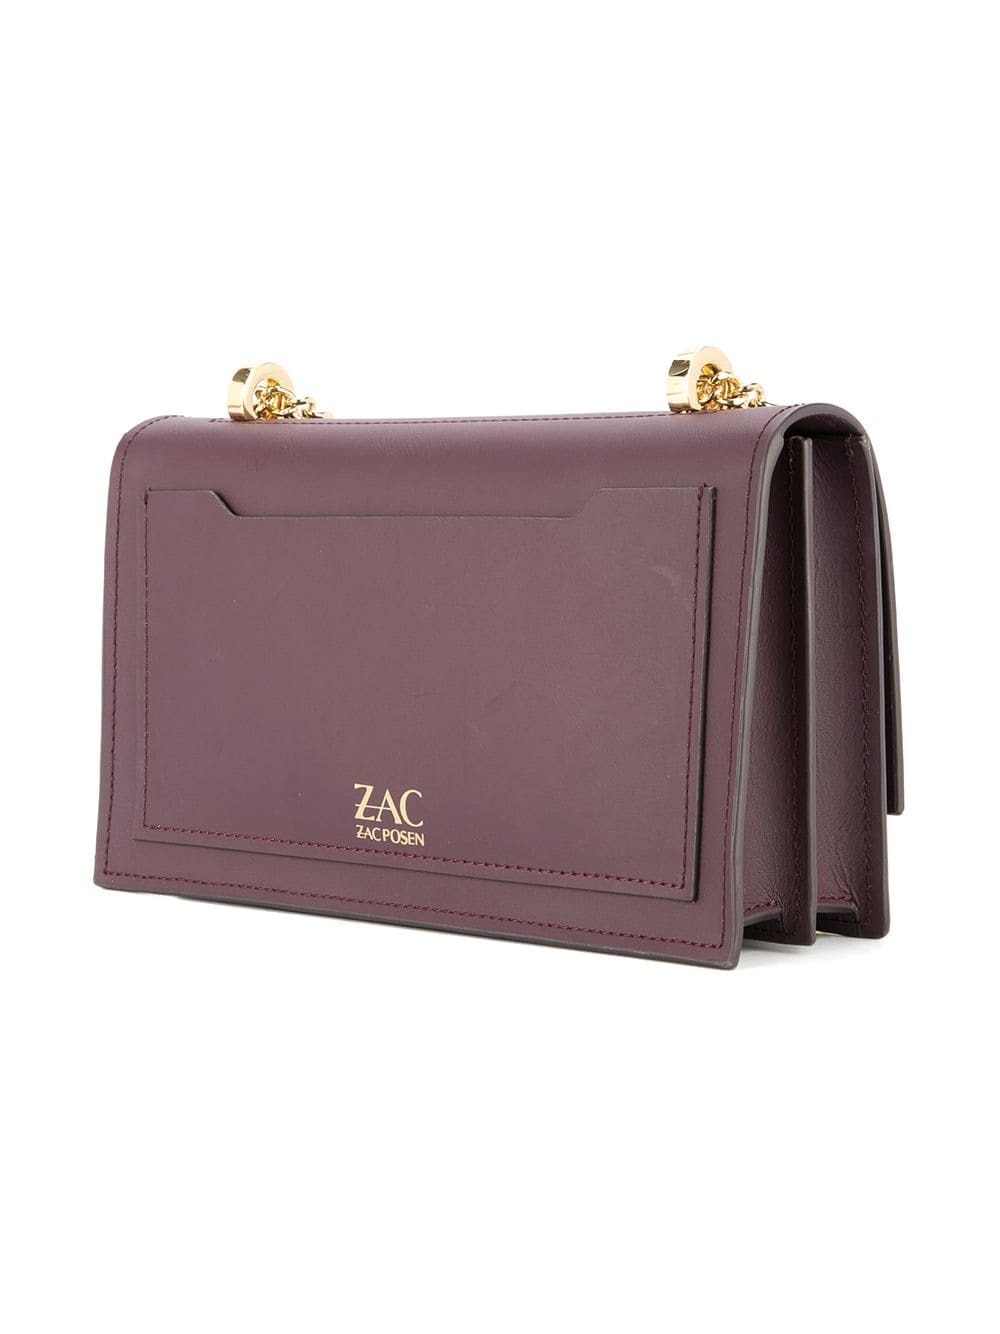 Zac Posen Pearl Purple Leather Leather Satchel Mini Bag NWT